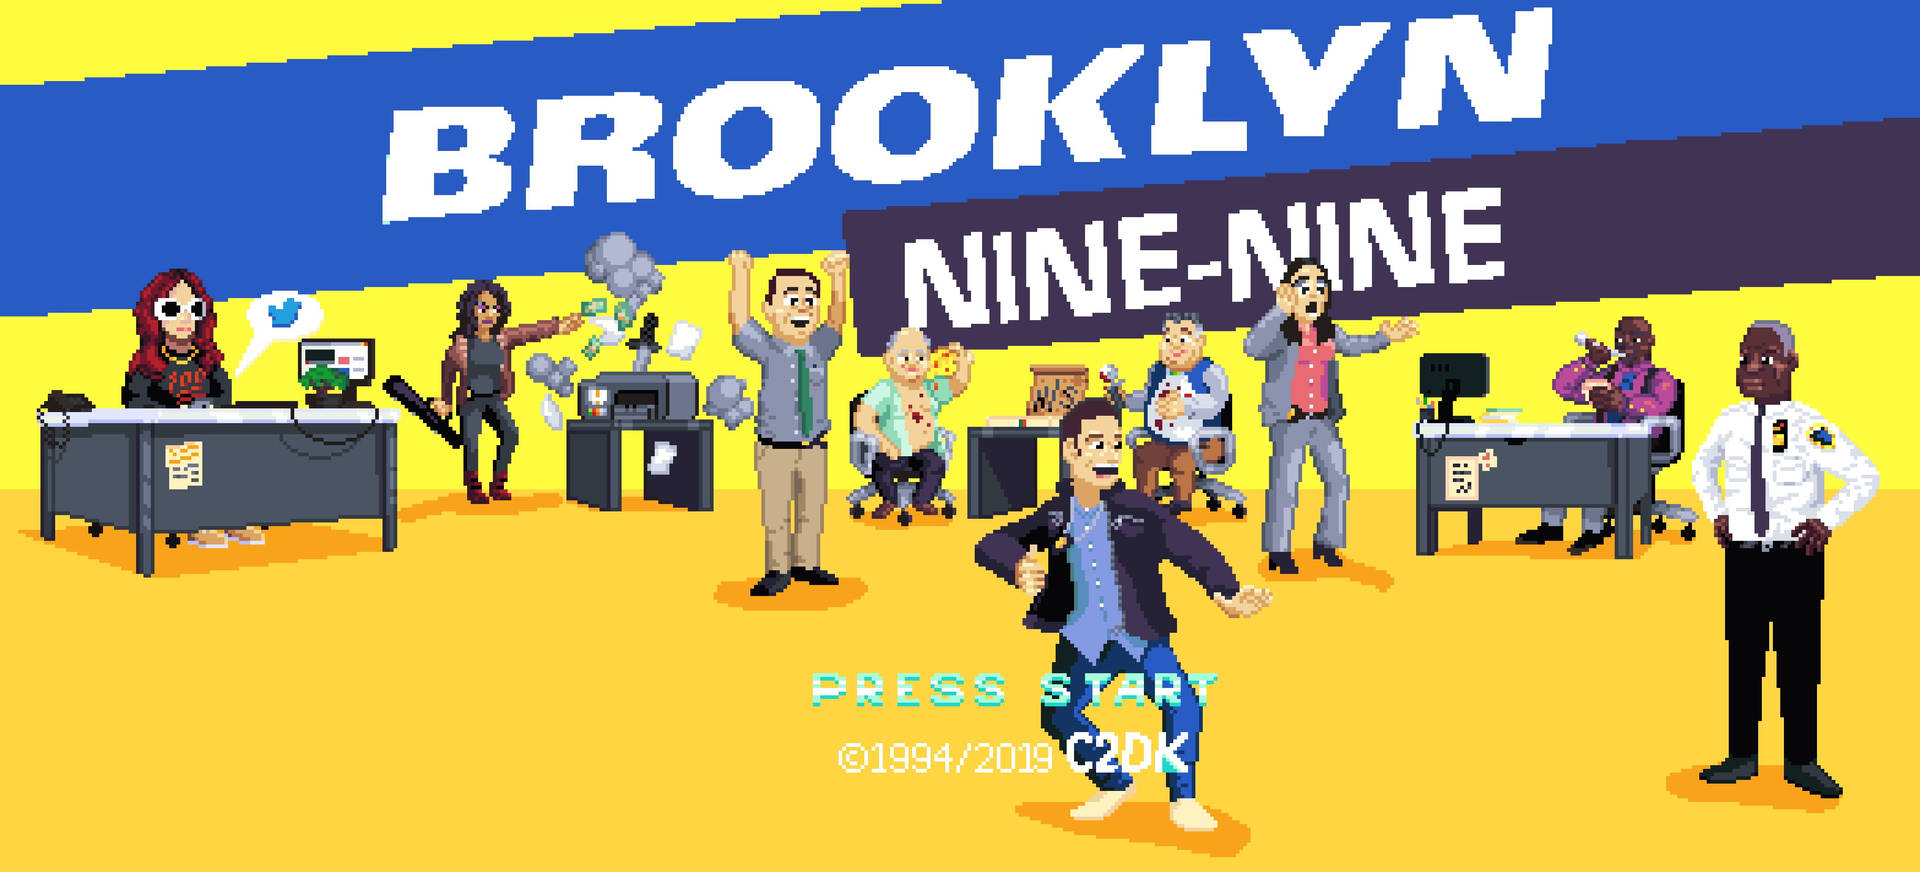 Celebrate The Cast Of Brooklyn Nine Nine In This Fun And Nostalgic 16-bit Pixel Art